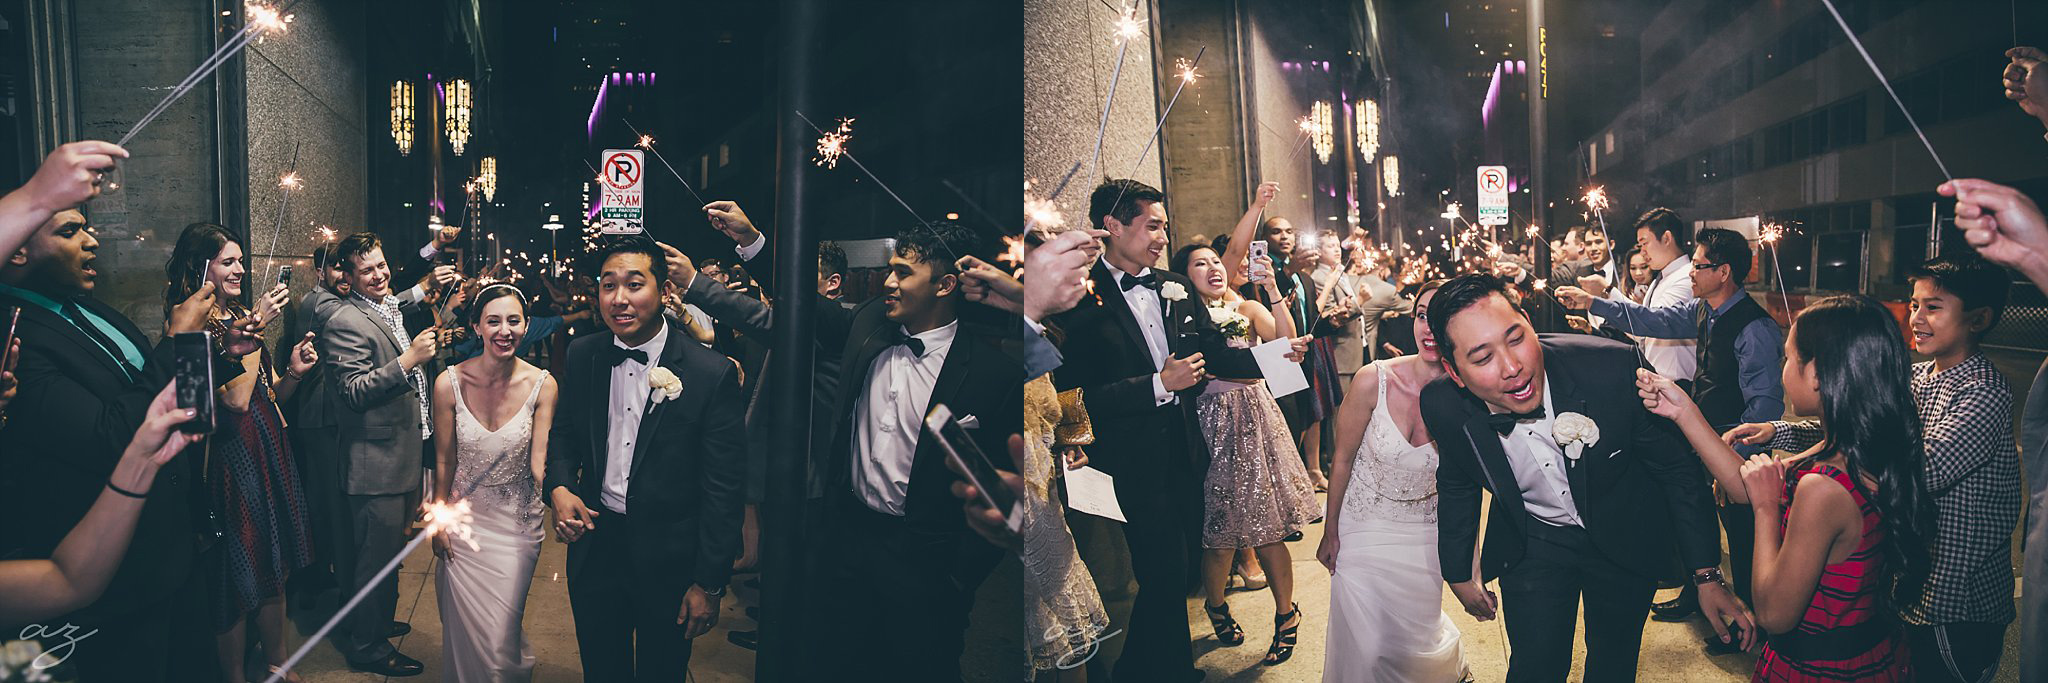 Carlisle Room wedding sparkler exit in downtown dallas